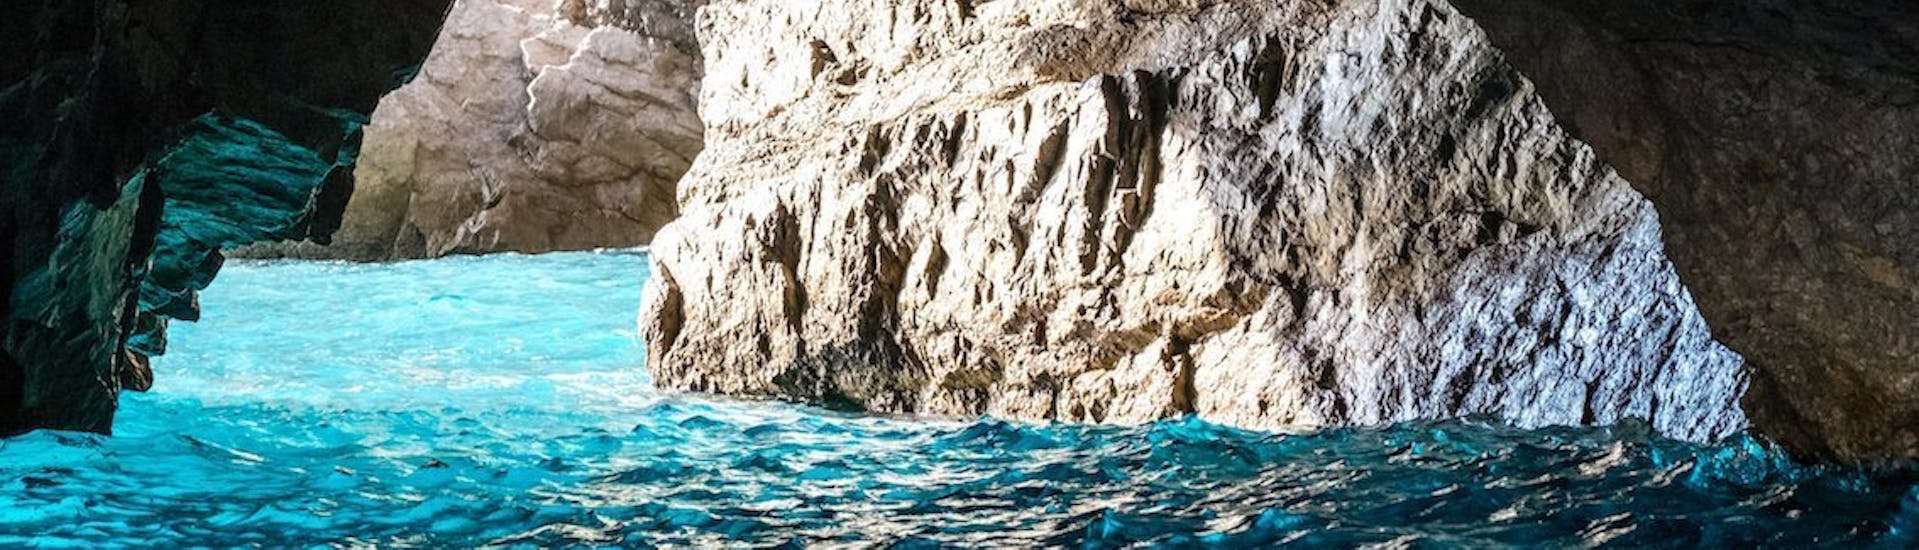 Balade en bateau vers les îles Li Galli et Capri à partir d'Amalfi.